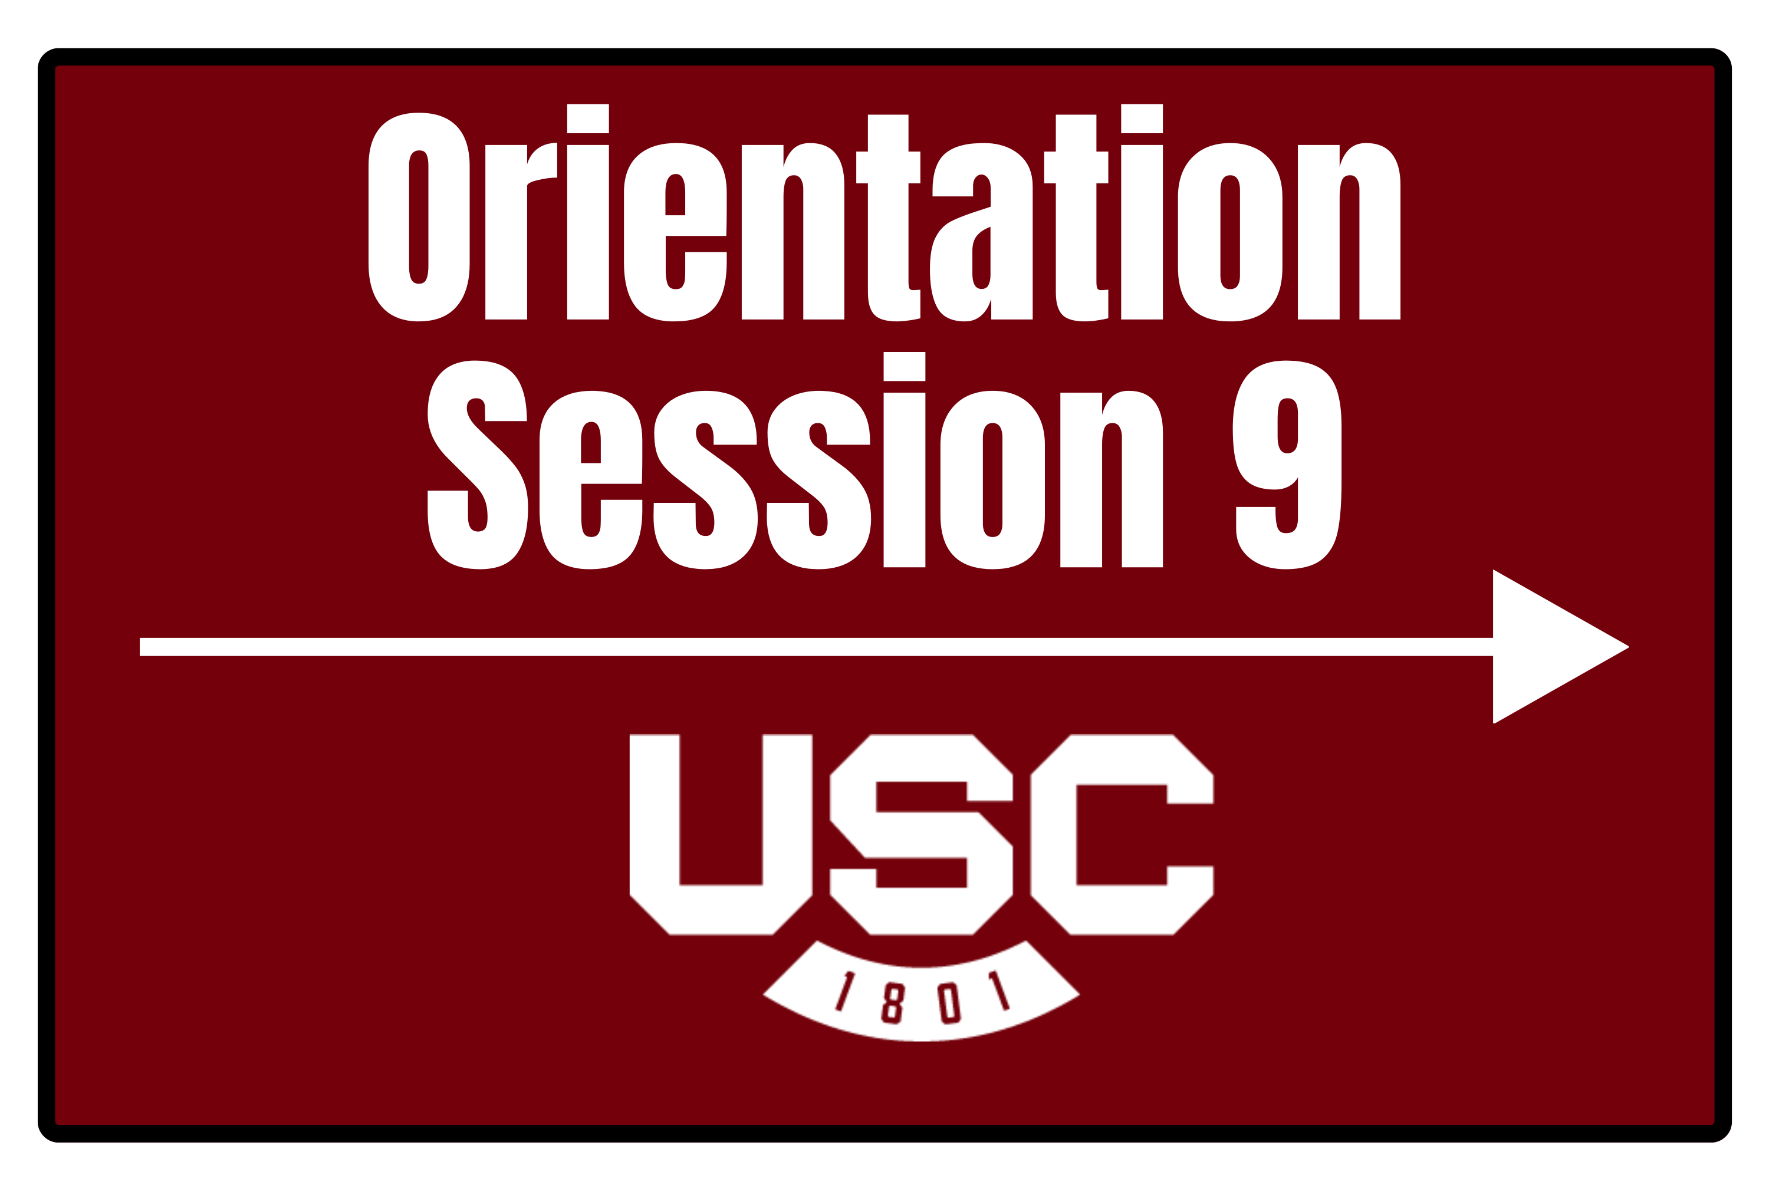 Orientation Session 9: June 24 - 25